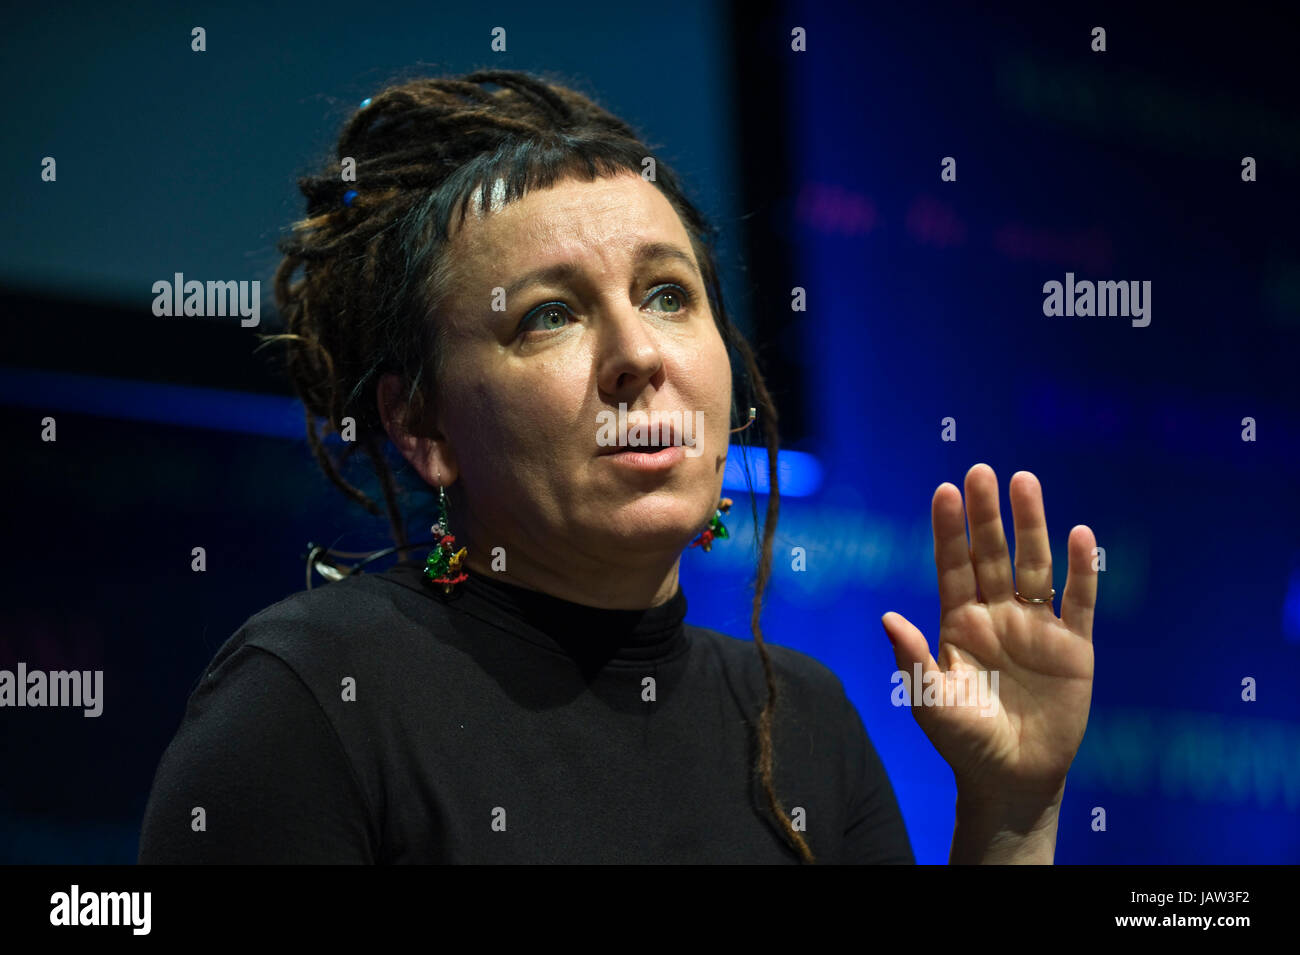 Olga tokarczuk romanziere polacco parlando sul palco a hay festival 2017 Hay-on-Wye powys wales uk Foto Stock